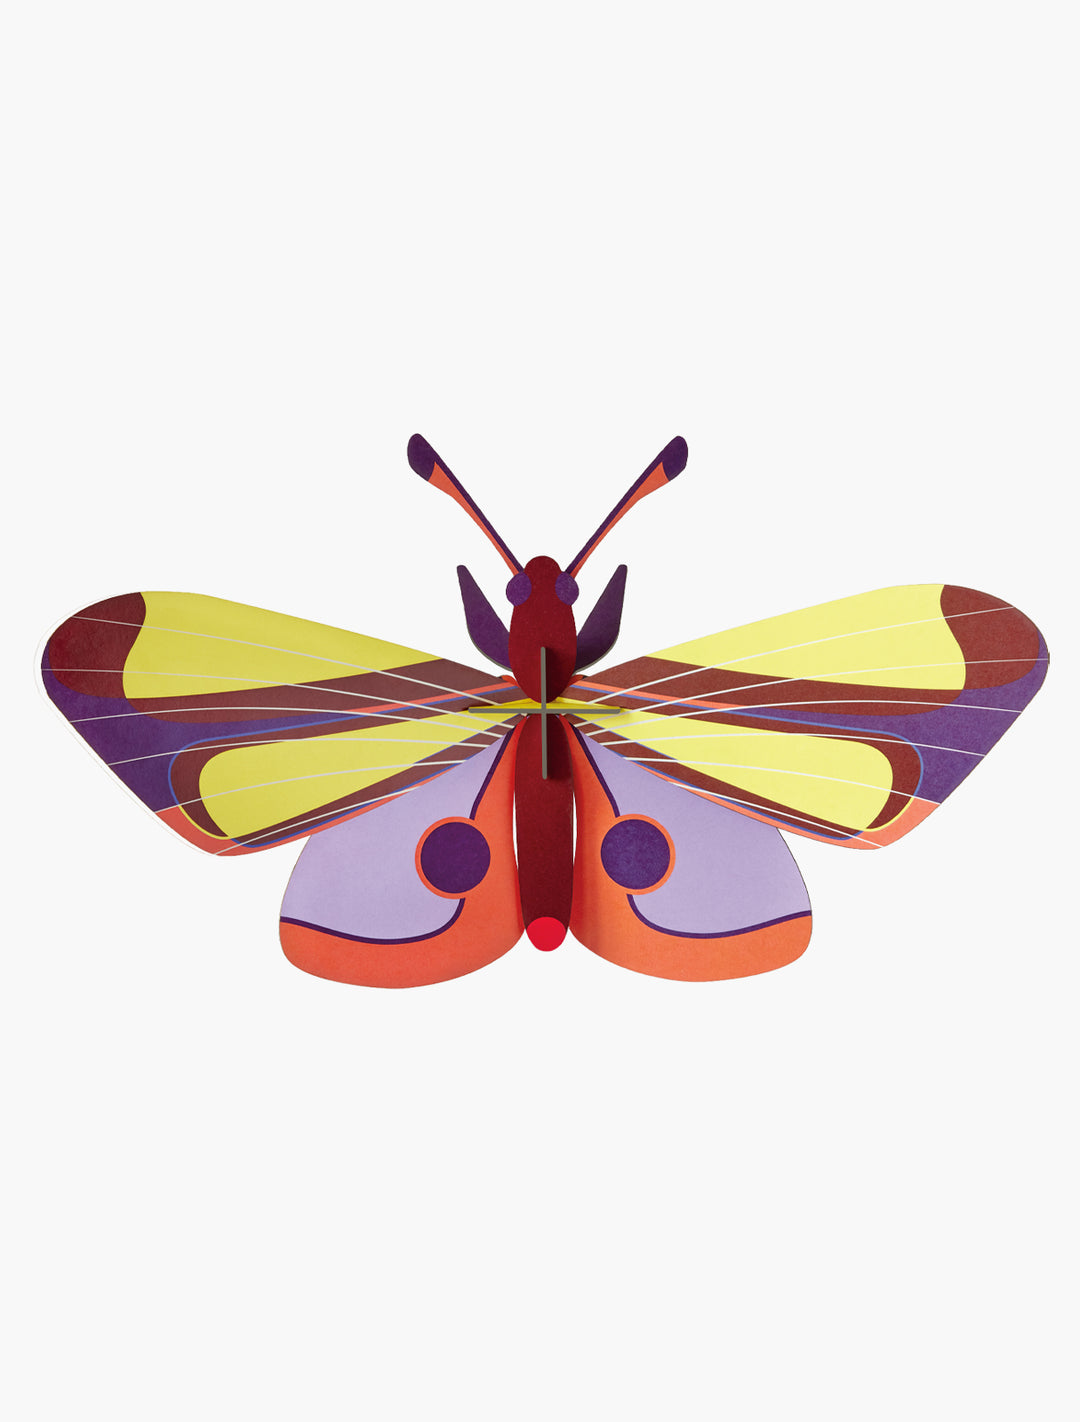 MAQUETA - Studio Roof, Purple Eyed Butterfly